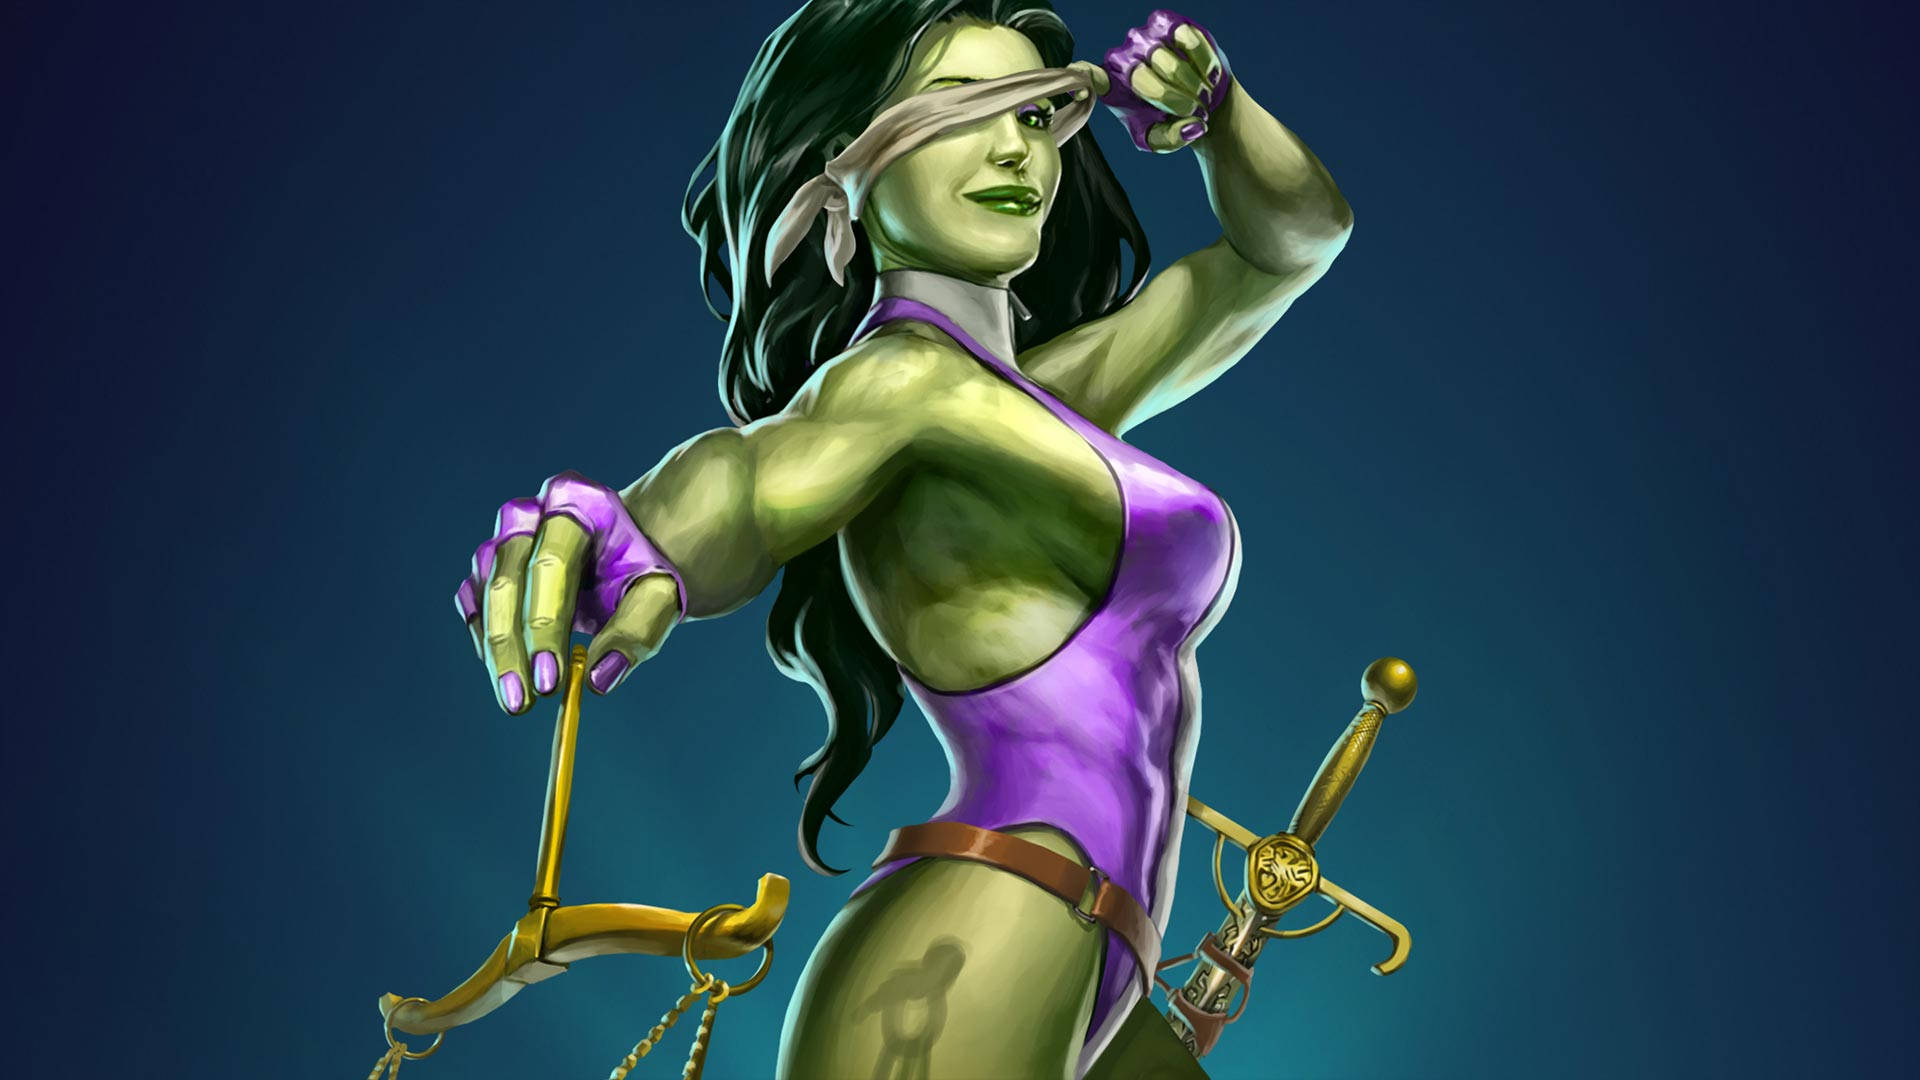 She Hulk Anime Art Picture